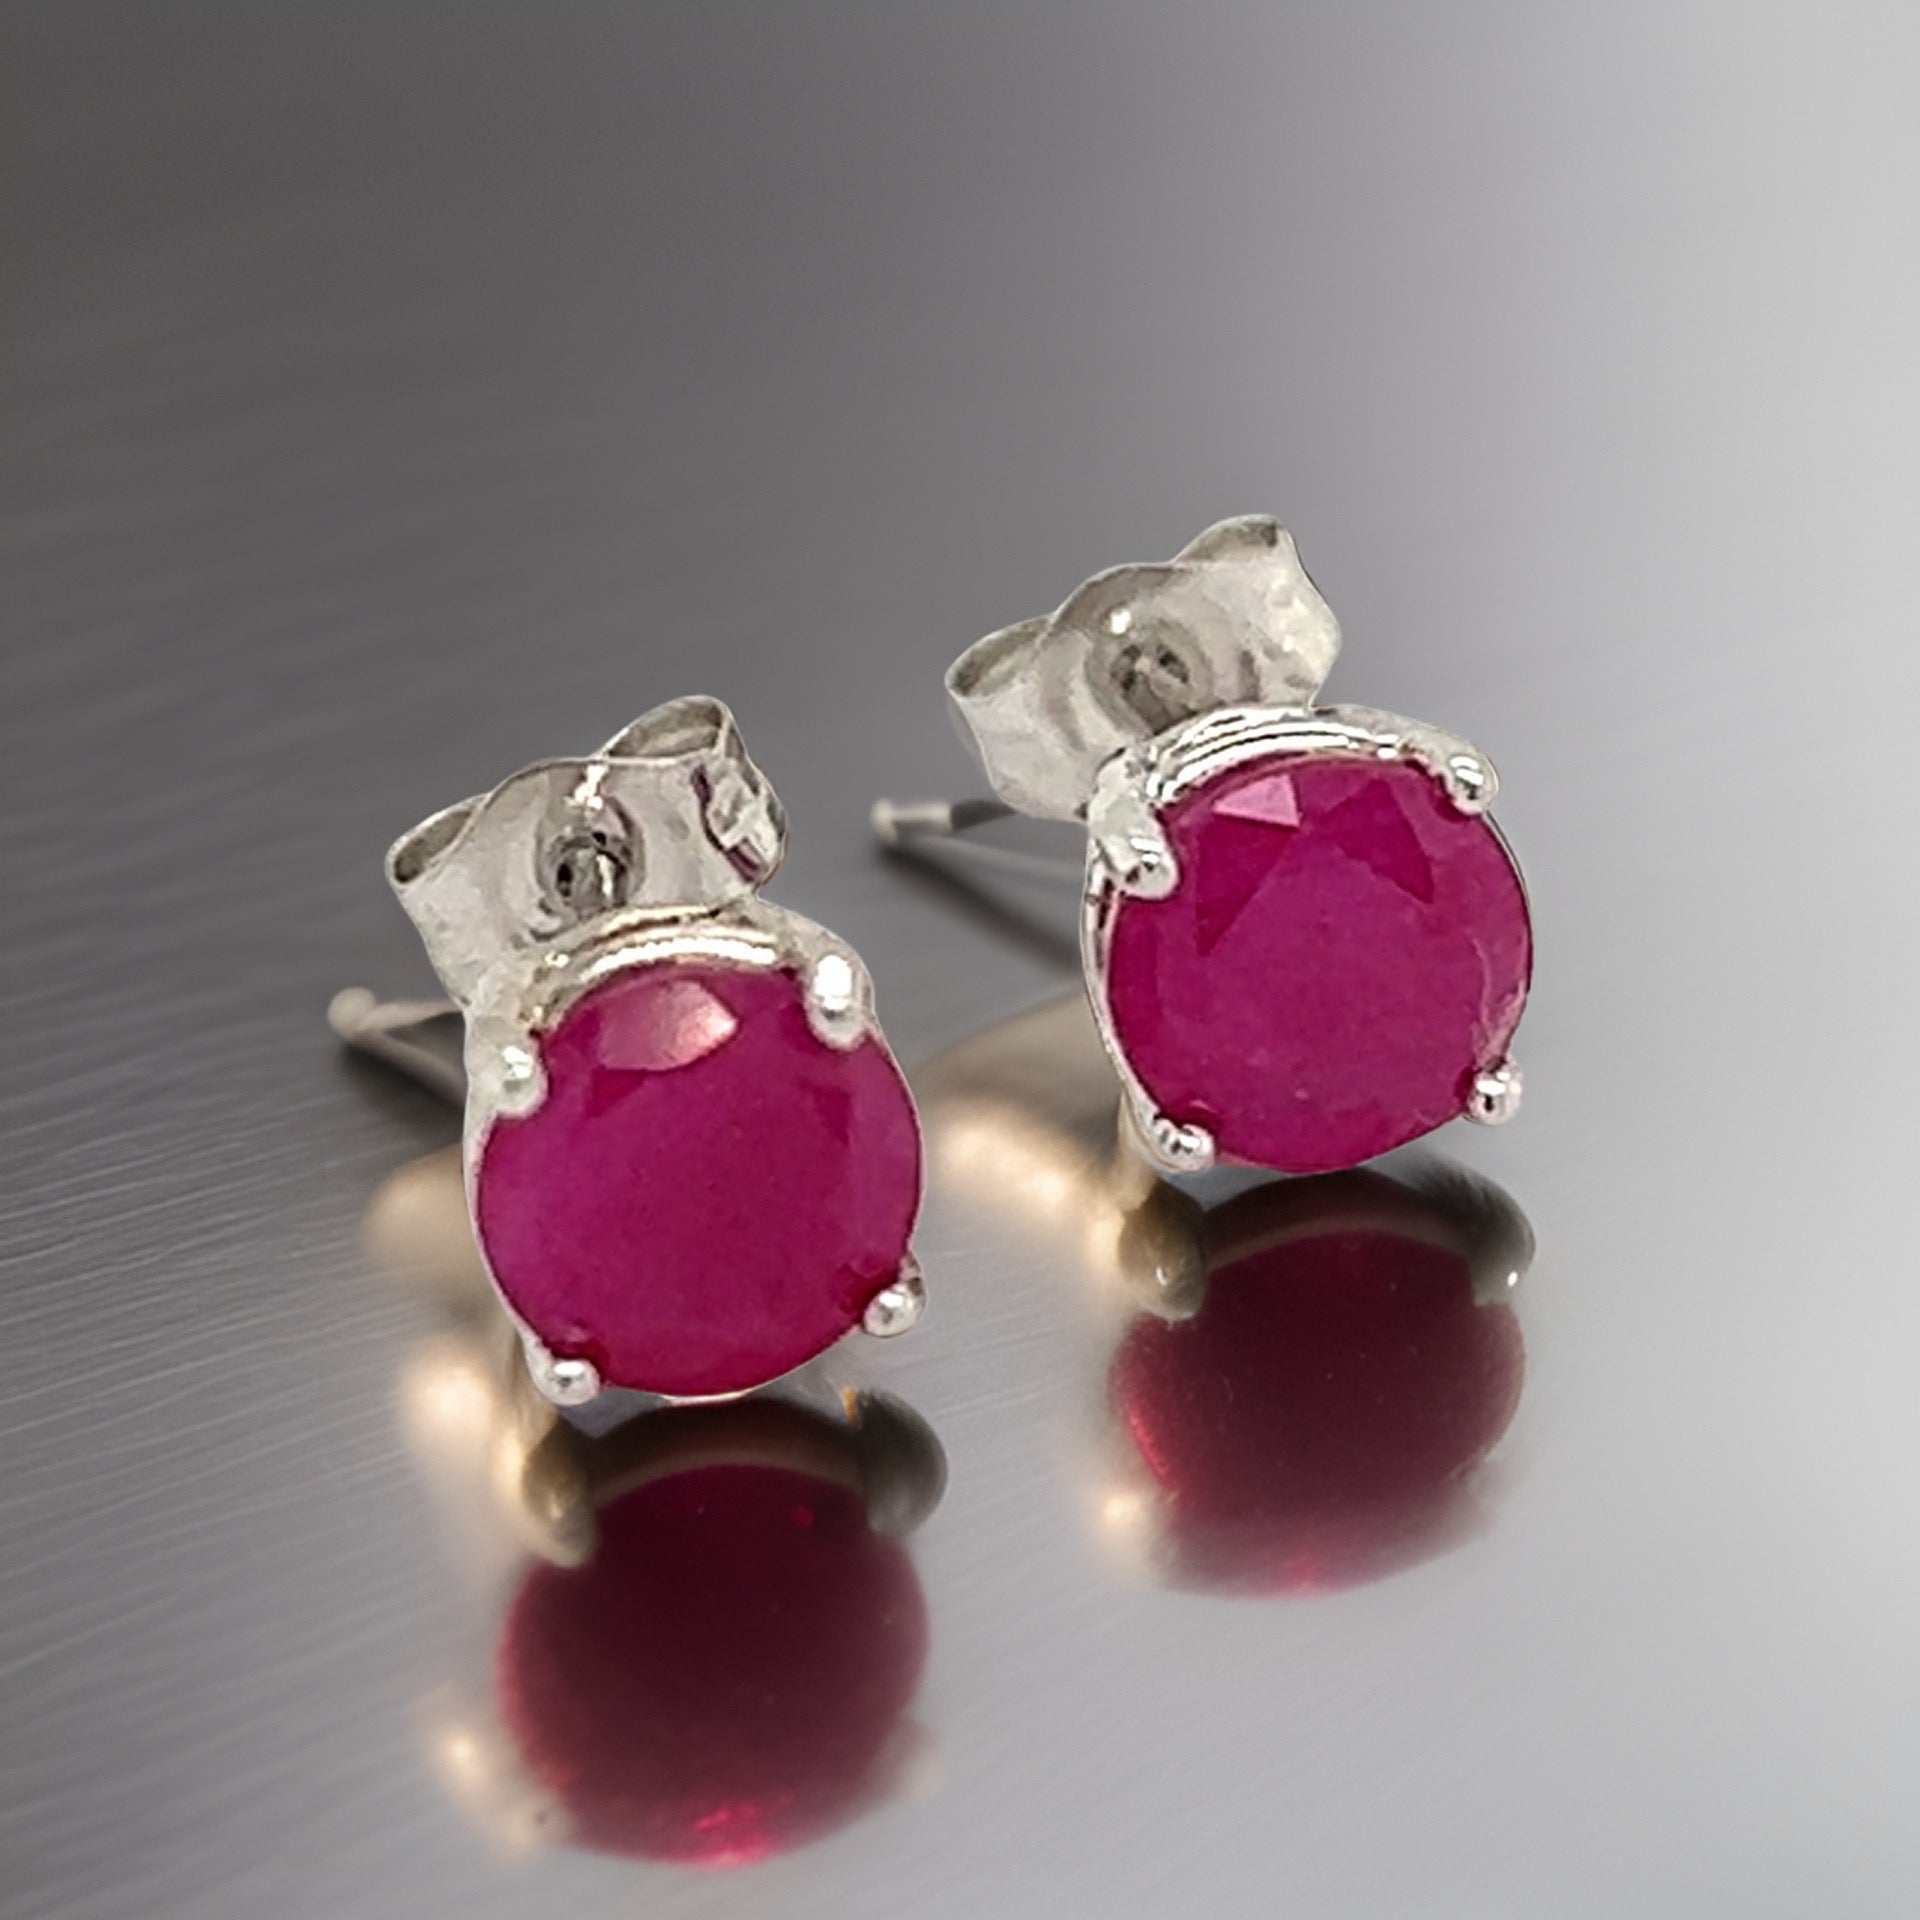 Natural Ruby Stud Earrings 14k Gold 1.91 TCW 1.28 Grams Certified $2,290 210750 - Certified Fine Jewelry